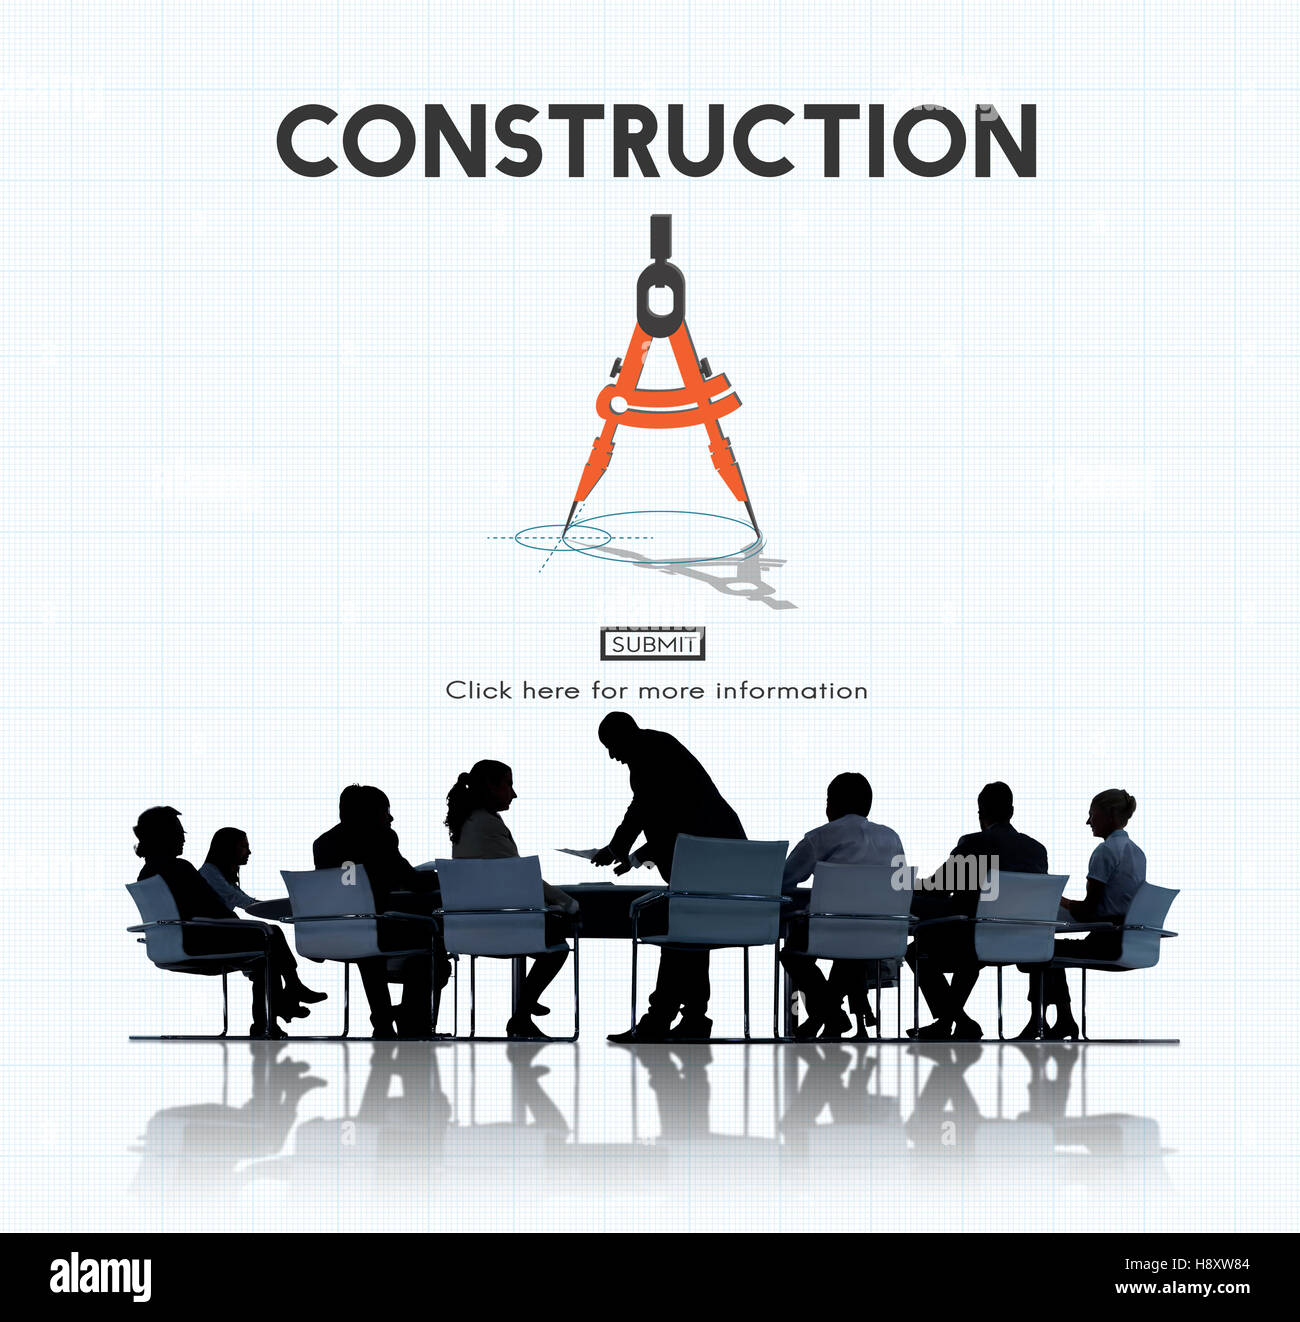 Construction Architecture Hardhat Helmet Site Concept Stock Photo